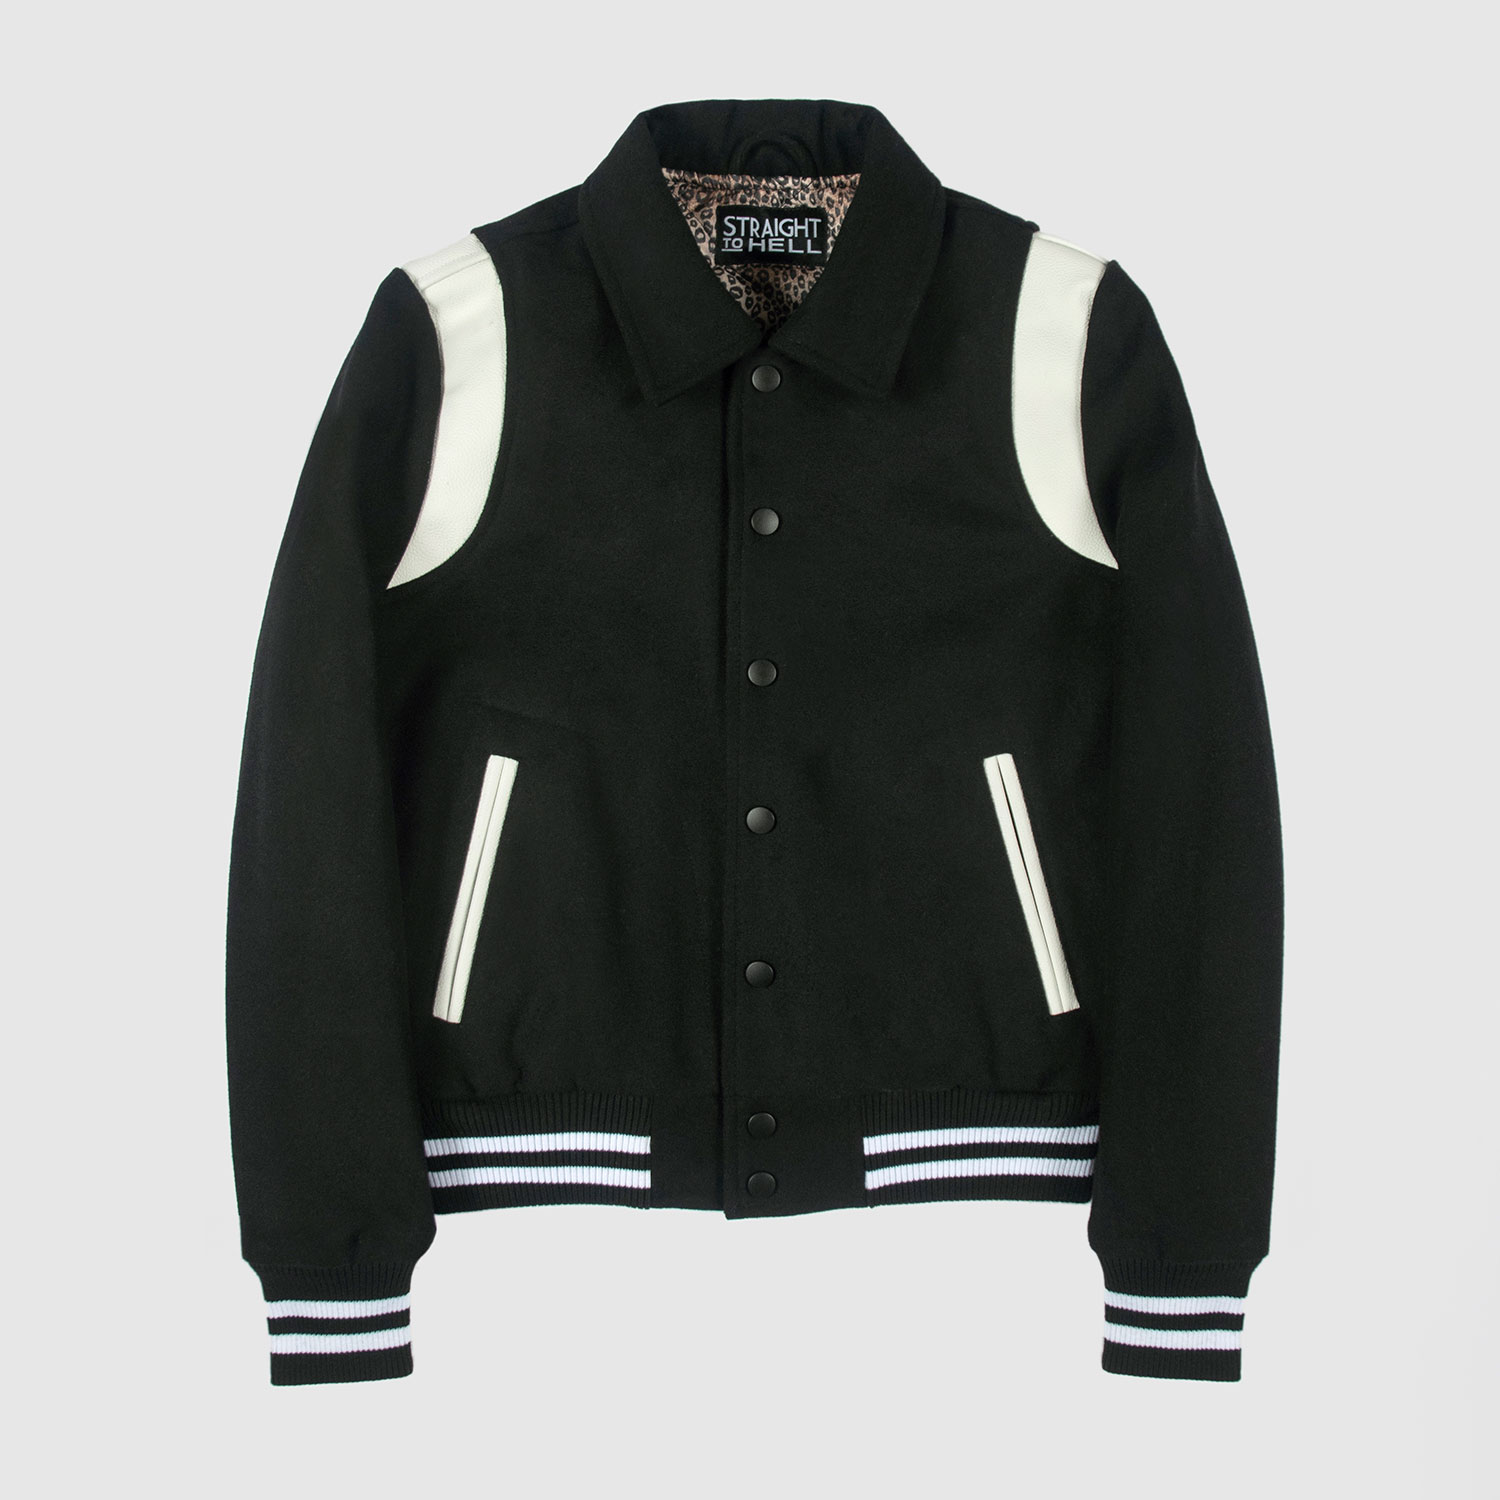 Jet - Black and White Varsity Jacket